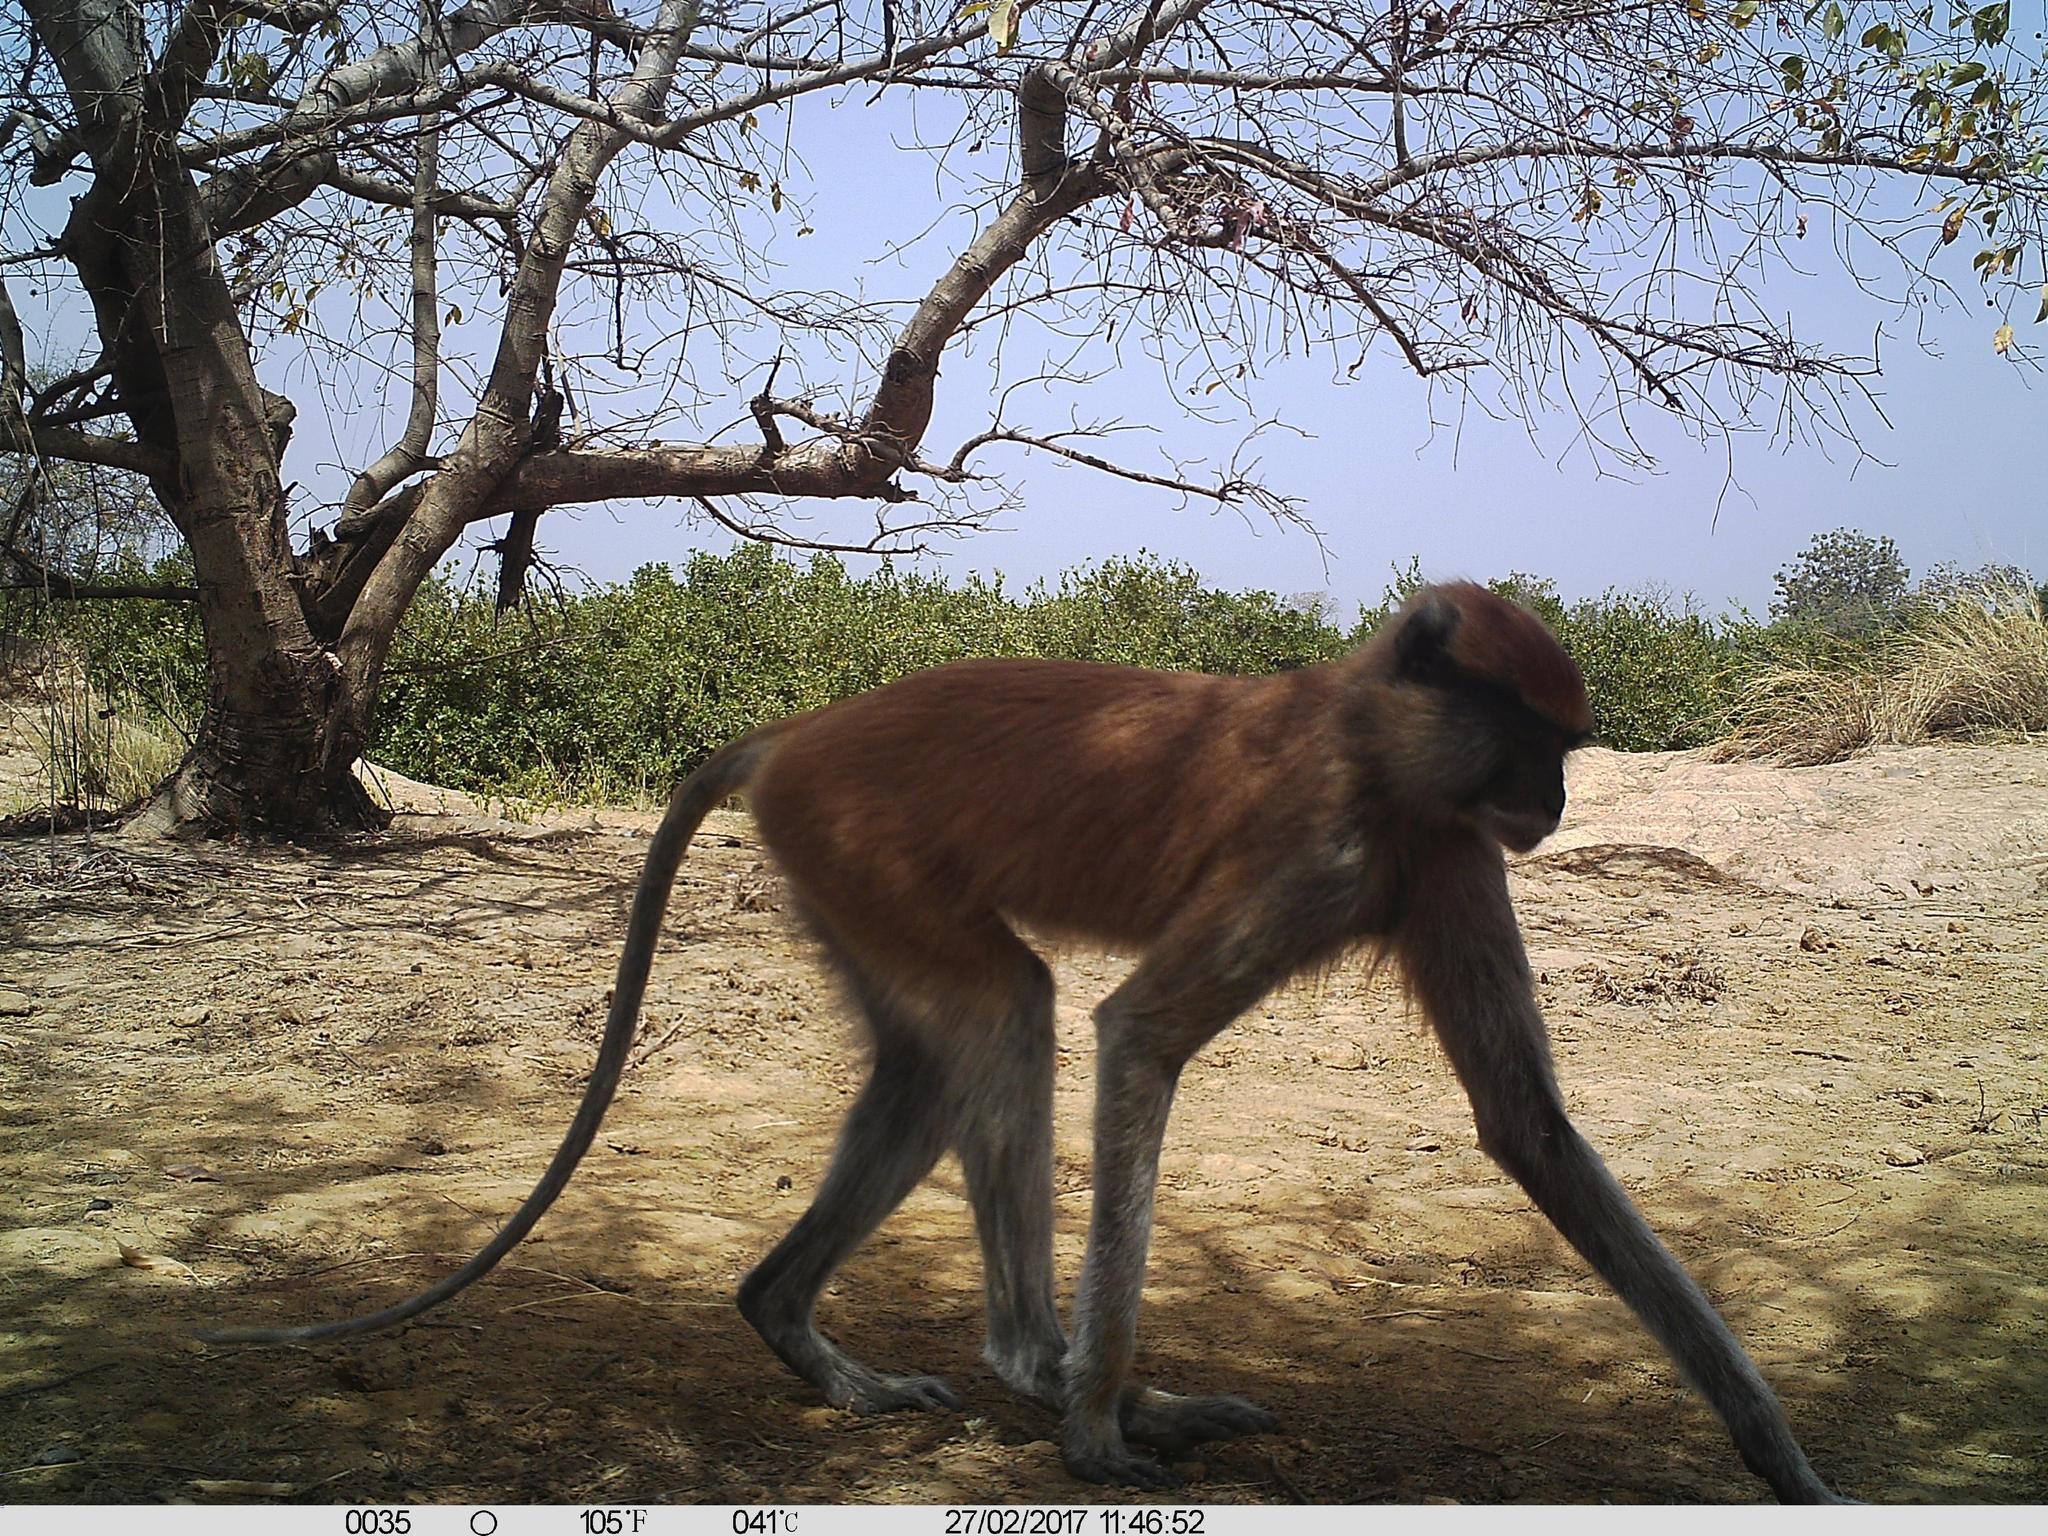 Image of patas monkey